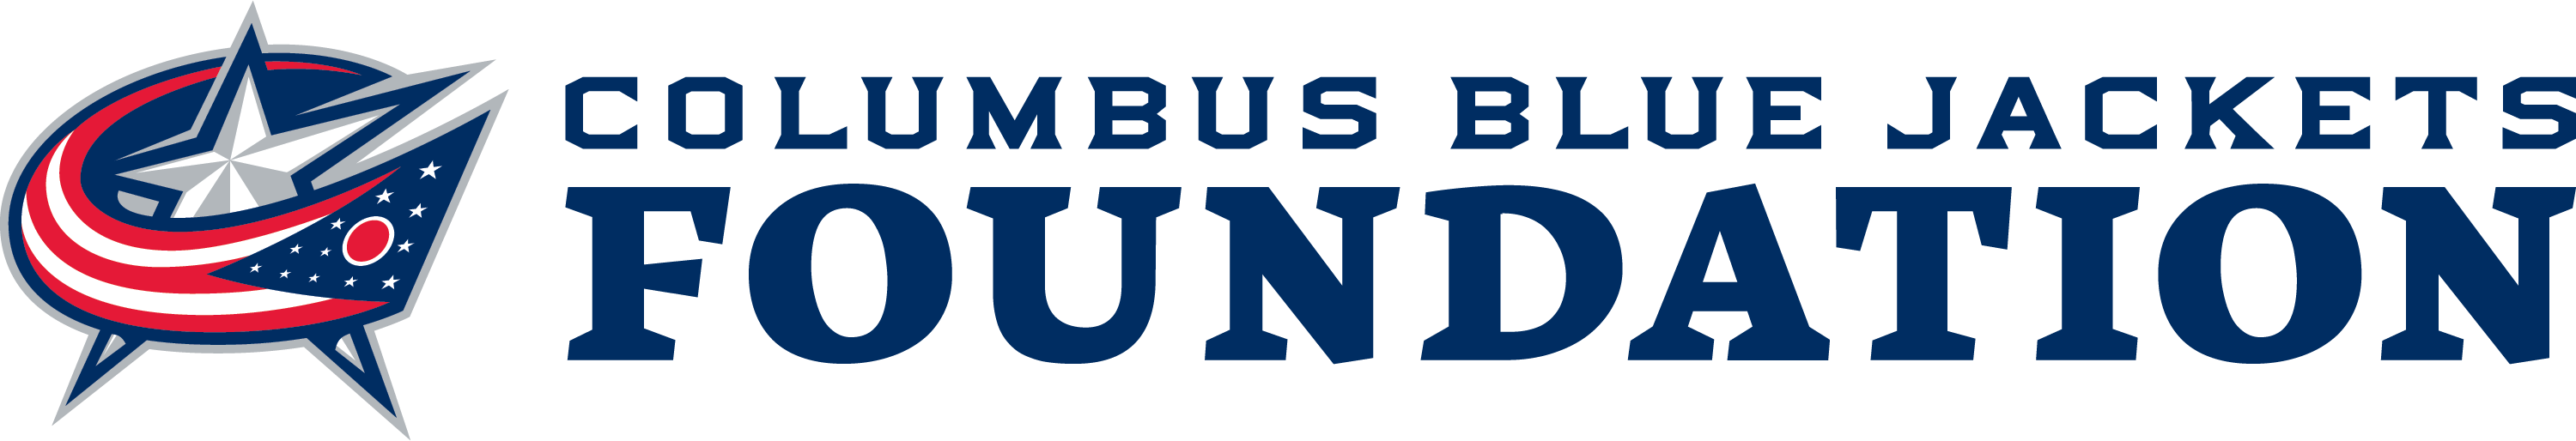 CBJ Foundation New 2018 logo